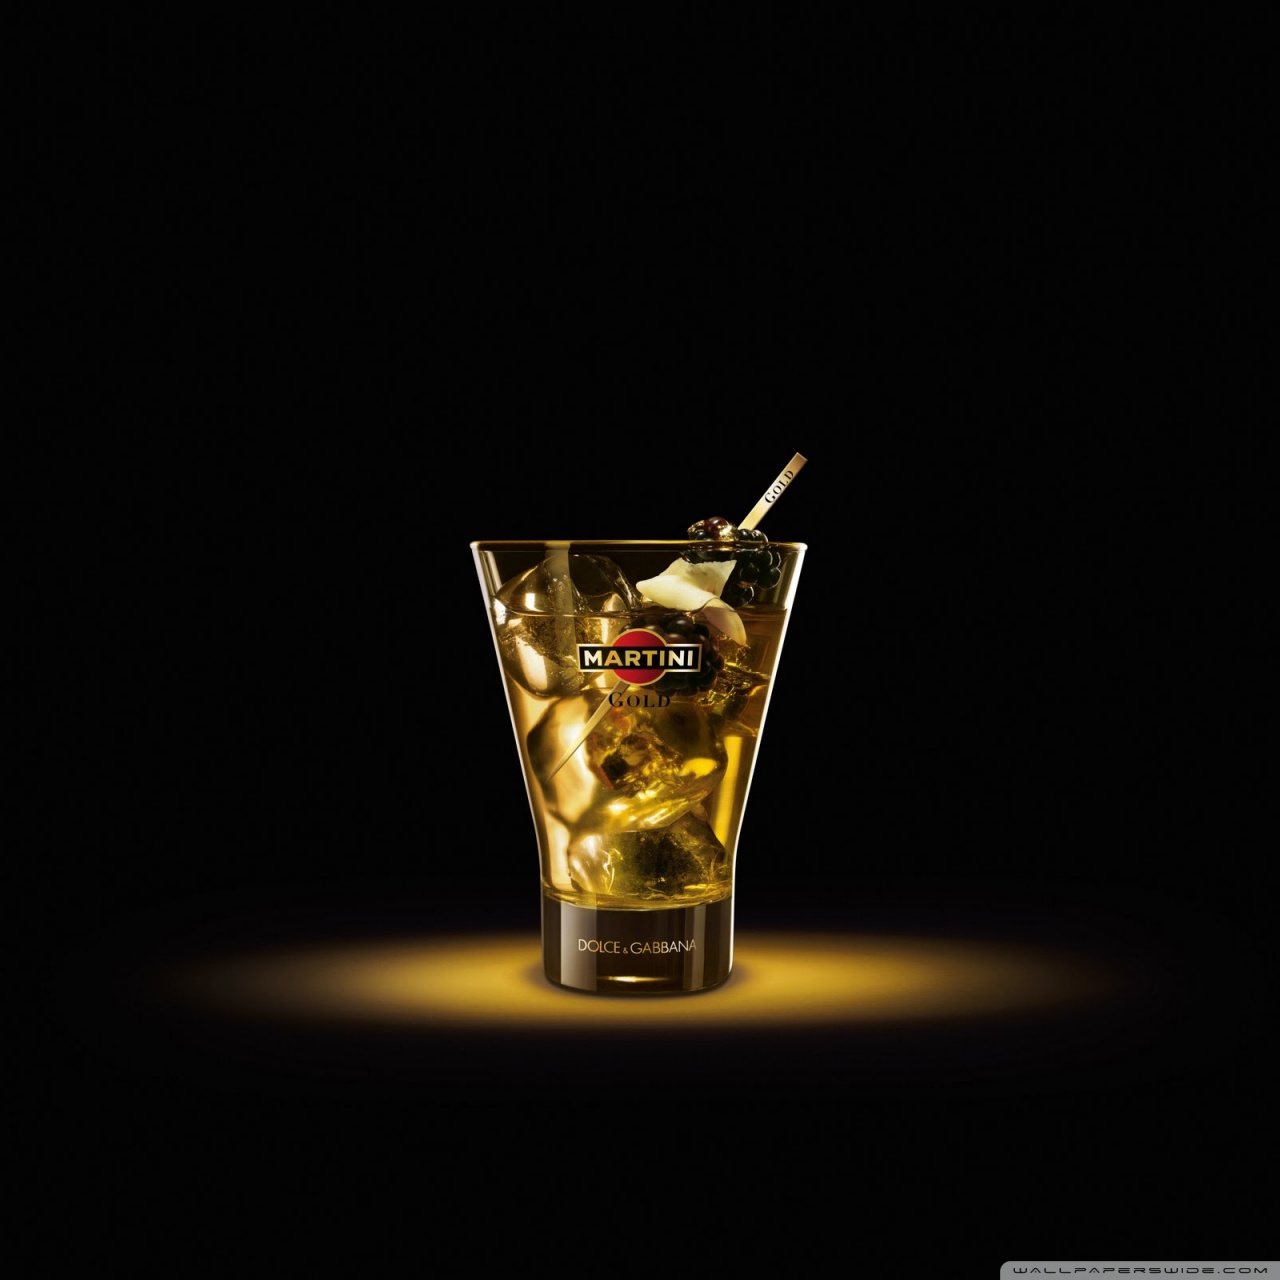 Ipad - Martini Gold Dolce Gabbana Price , HD Wallpaper & Backgrounds